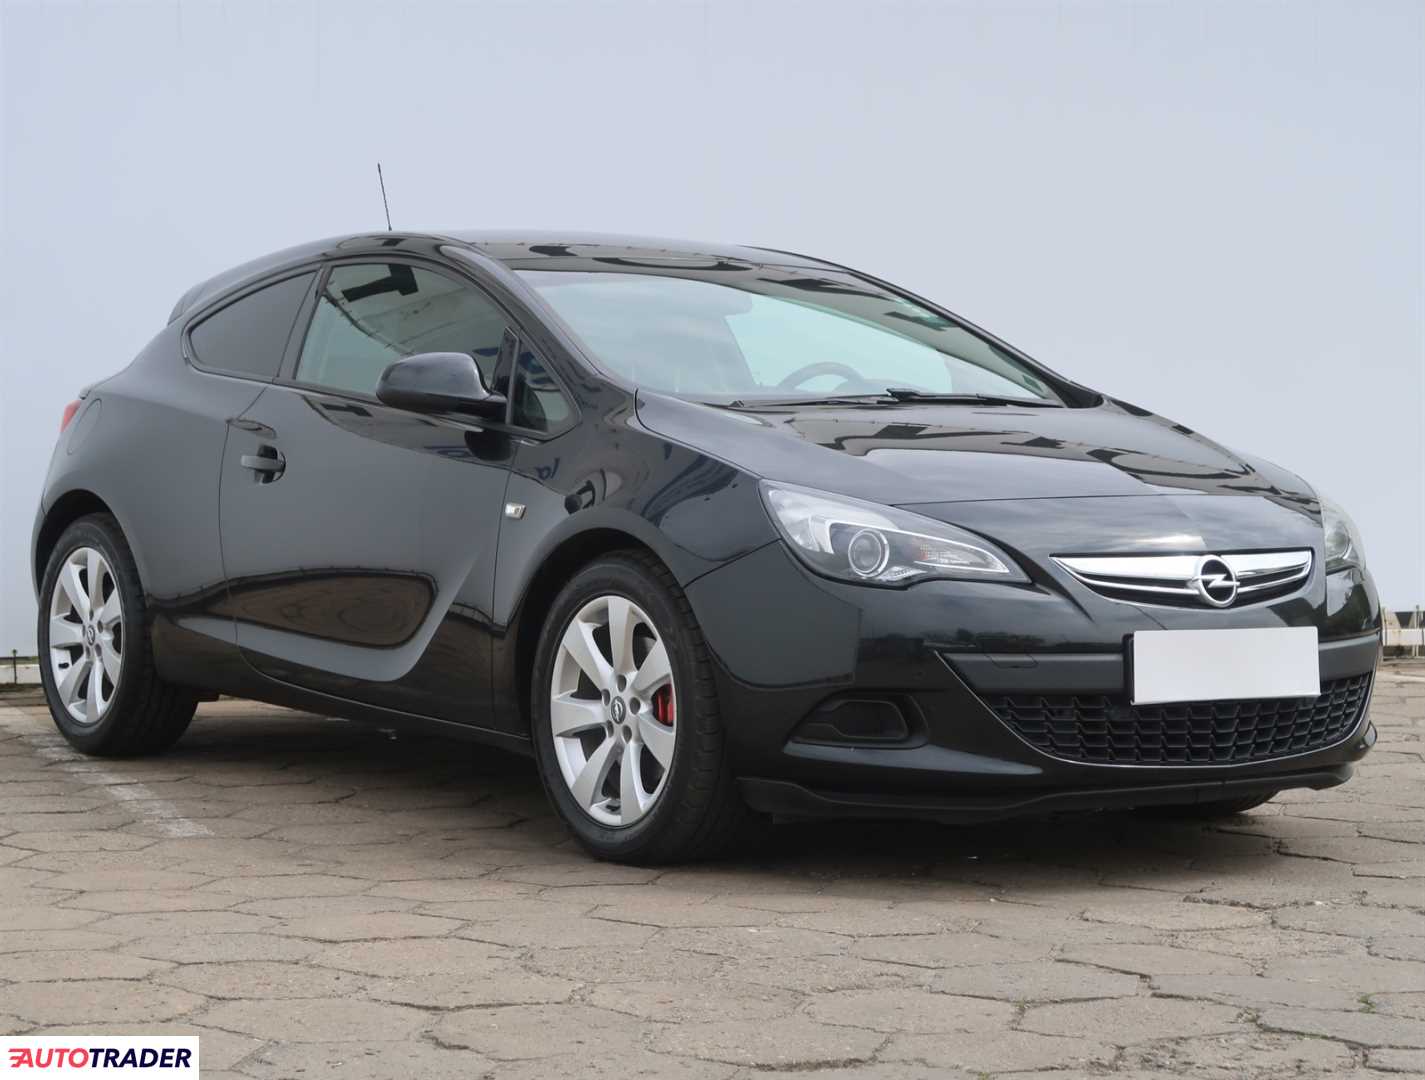 Opel Astra 2013 1.4 118 KM